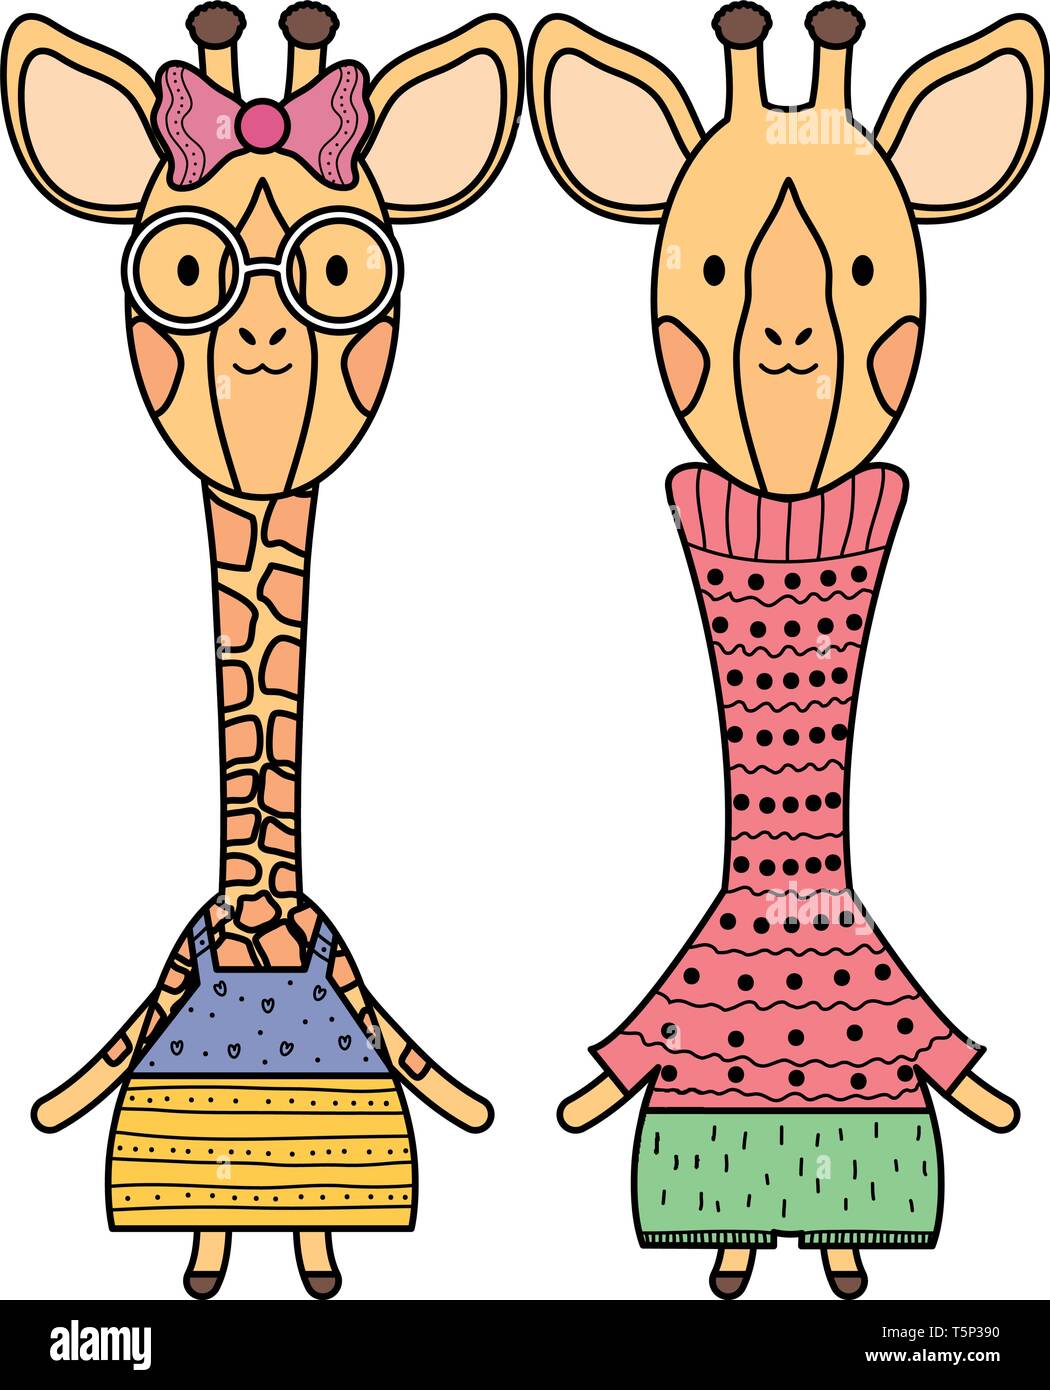 cute giraffes couple childish characters vector illustration design Stock Vector